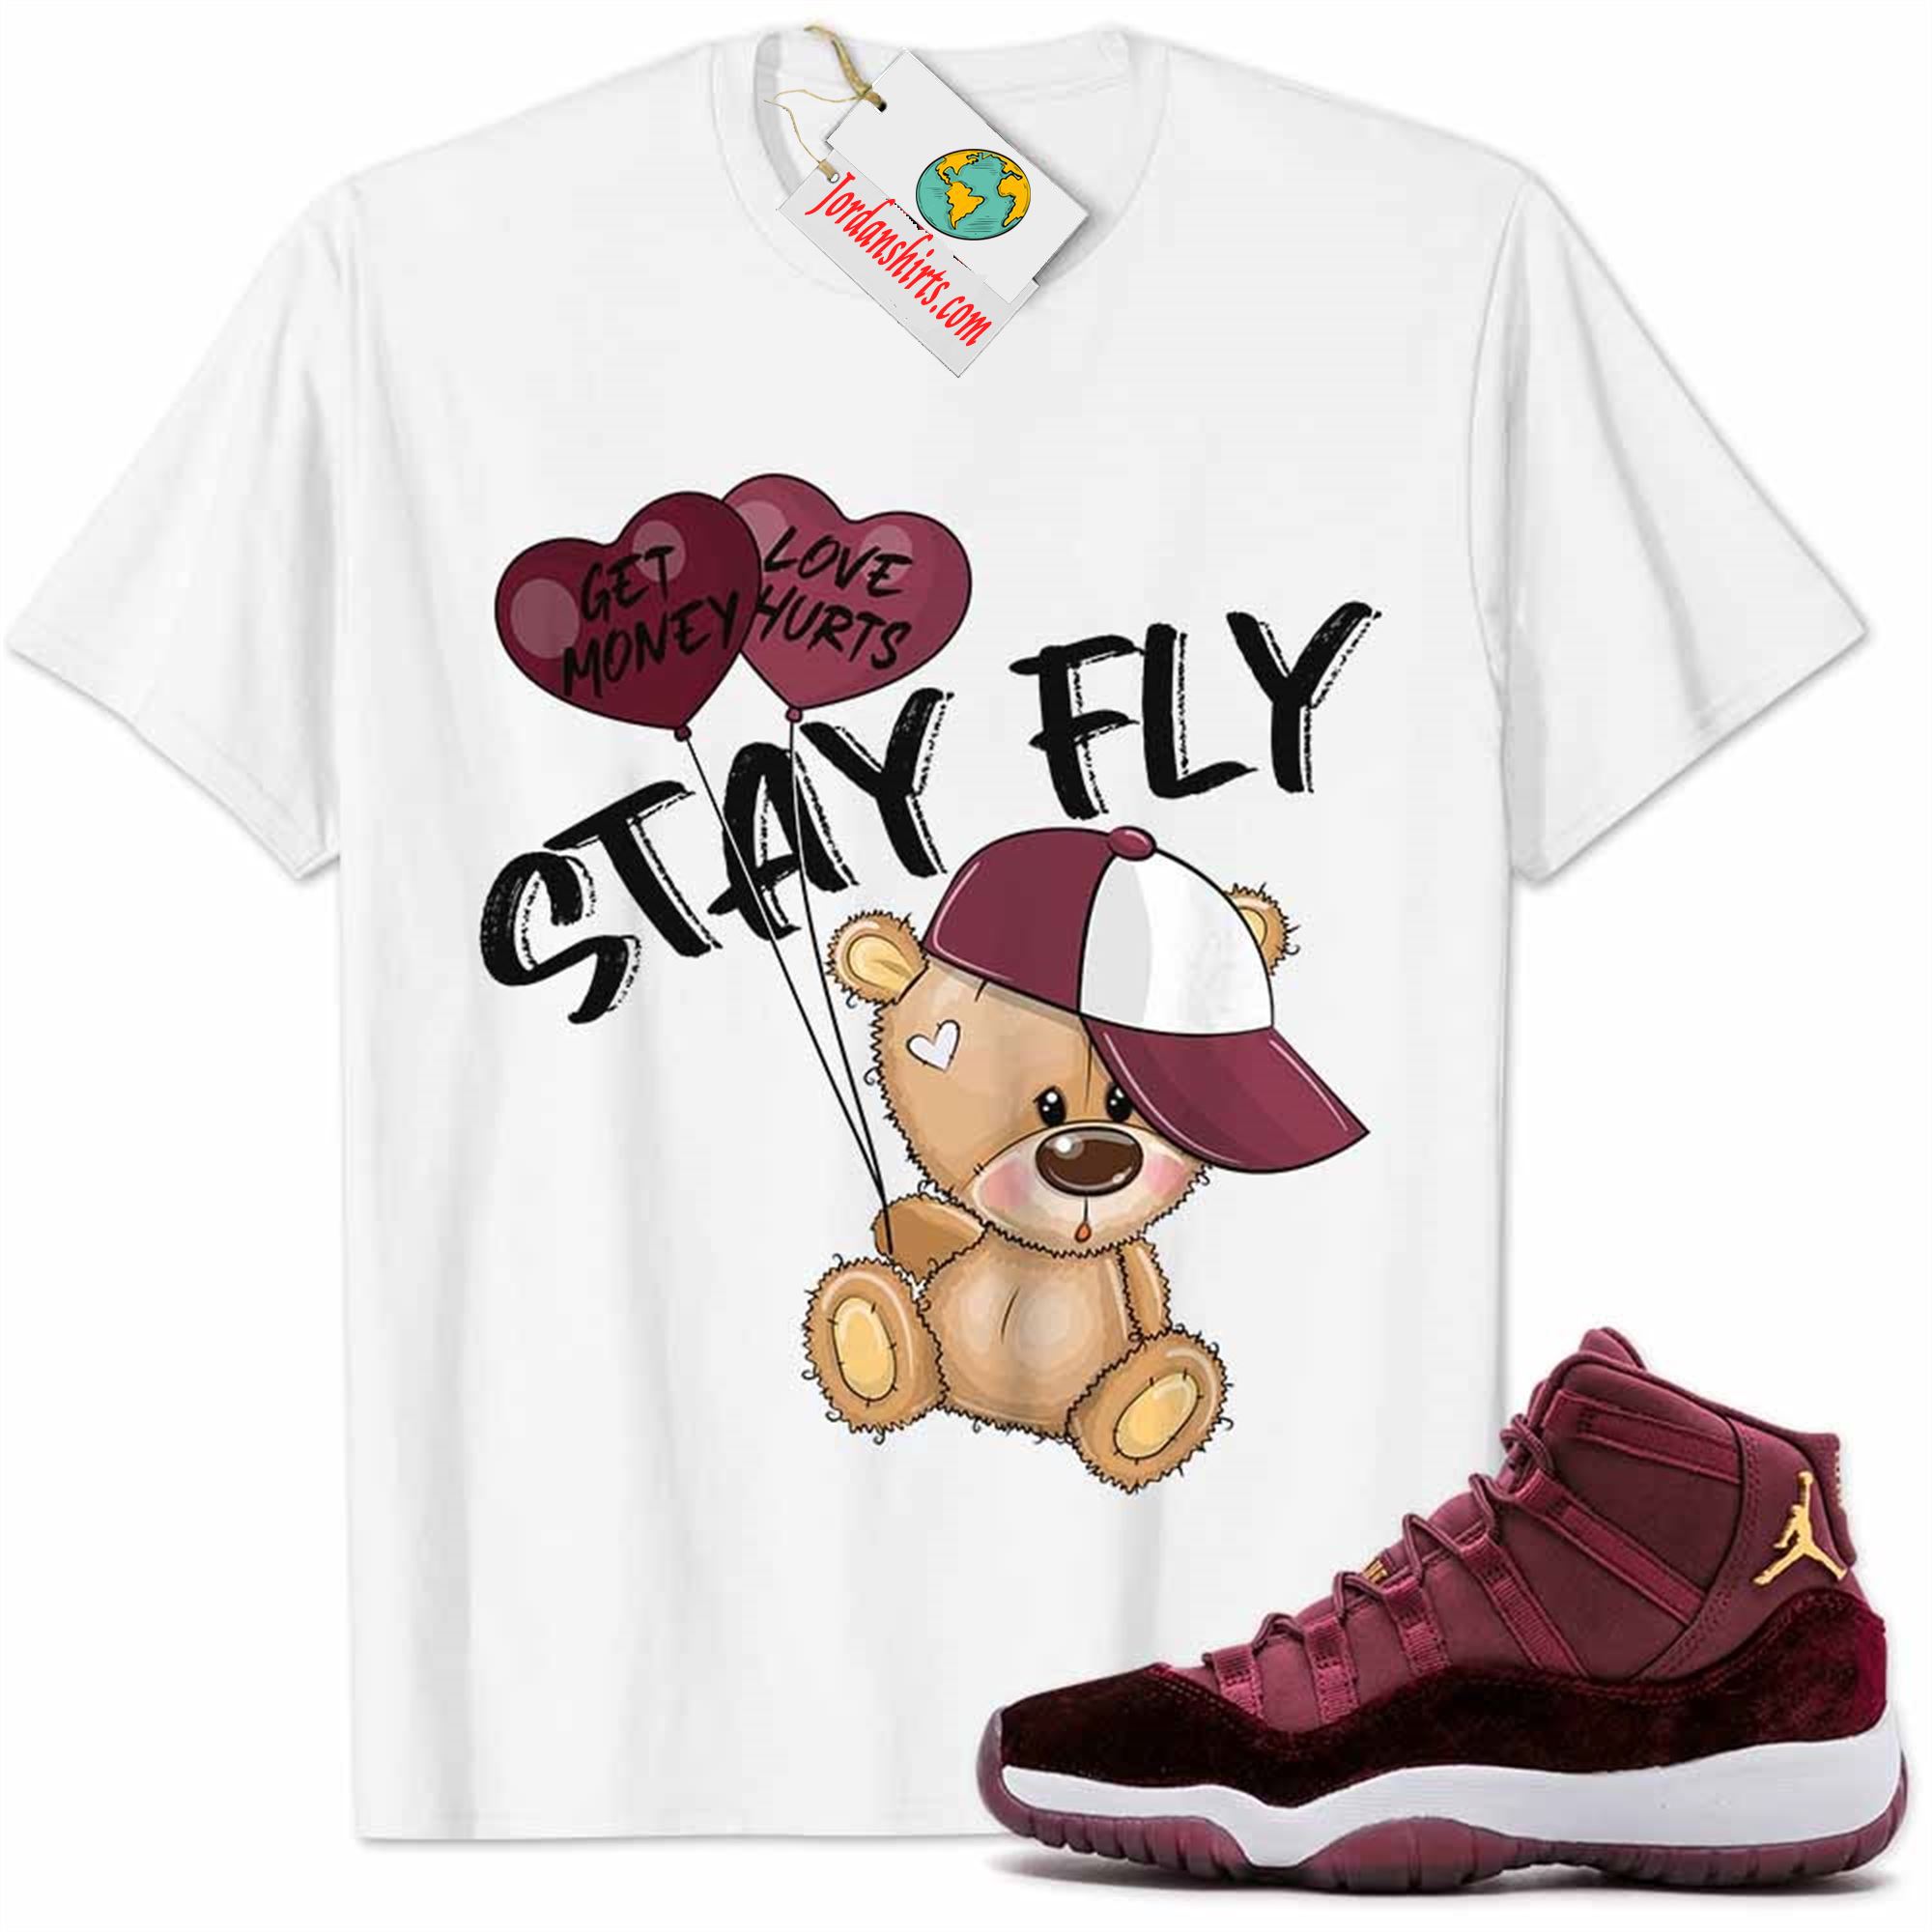 Jordan 11 Shirt, Velvet 11s Shirt Cute Teddy Bear Stay Fly Get Money White Size Up To 5xl